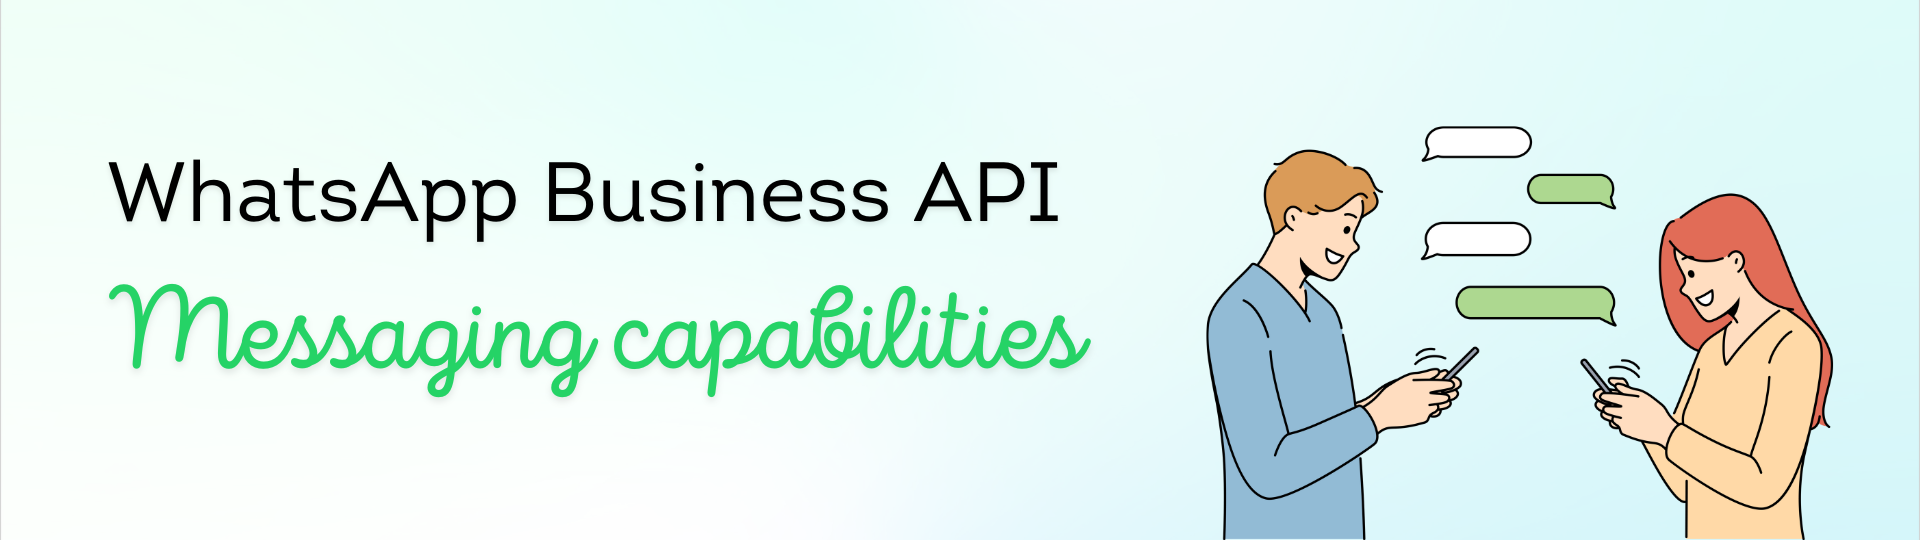 Messaging capabilities – WhatsApp API Templates & Automated Responses